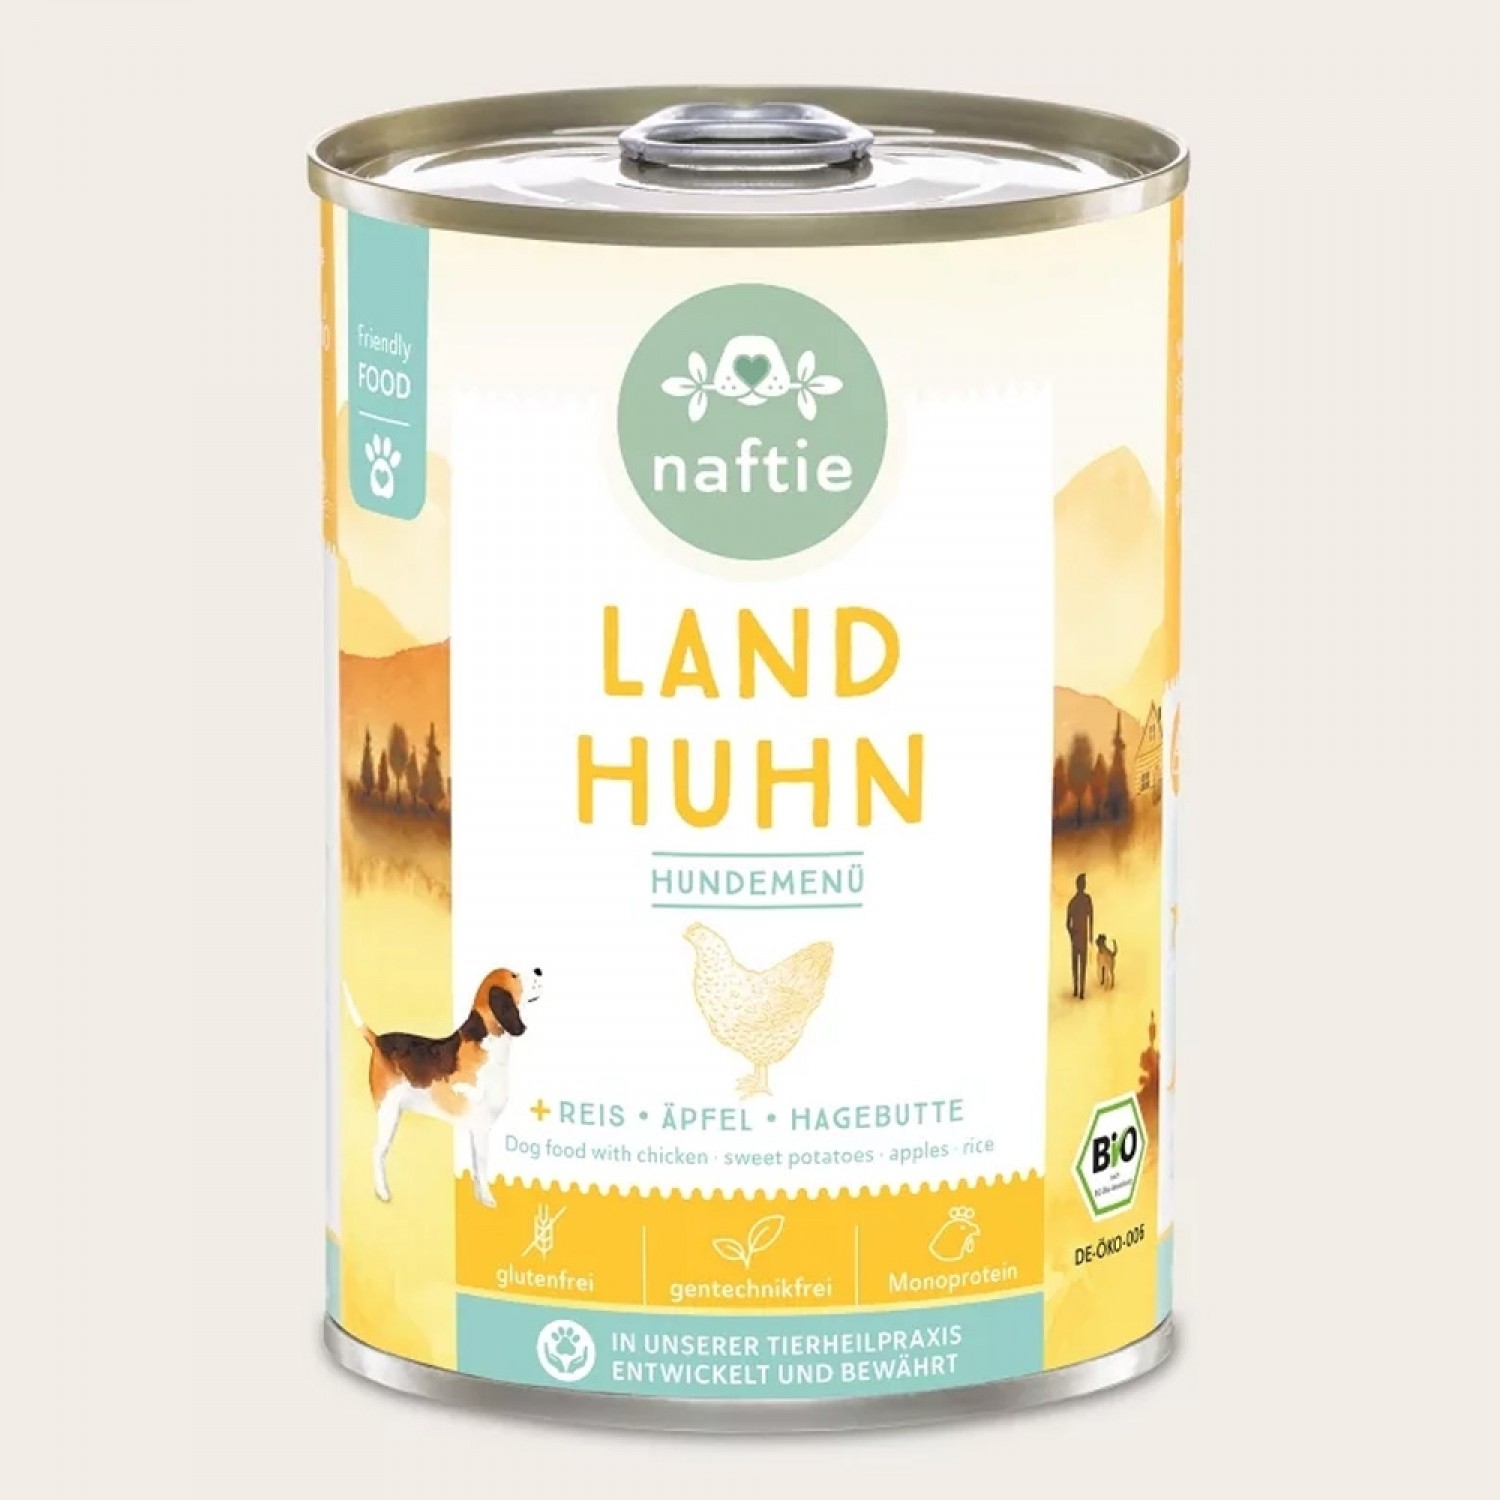 Bio Land Huhn+ Dosenfutter-Menü » naftie